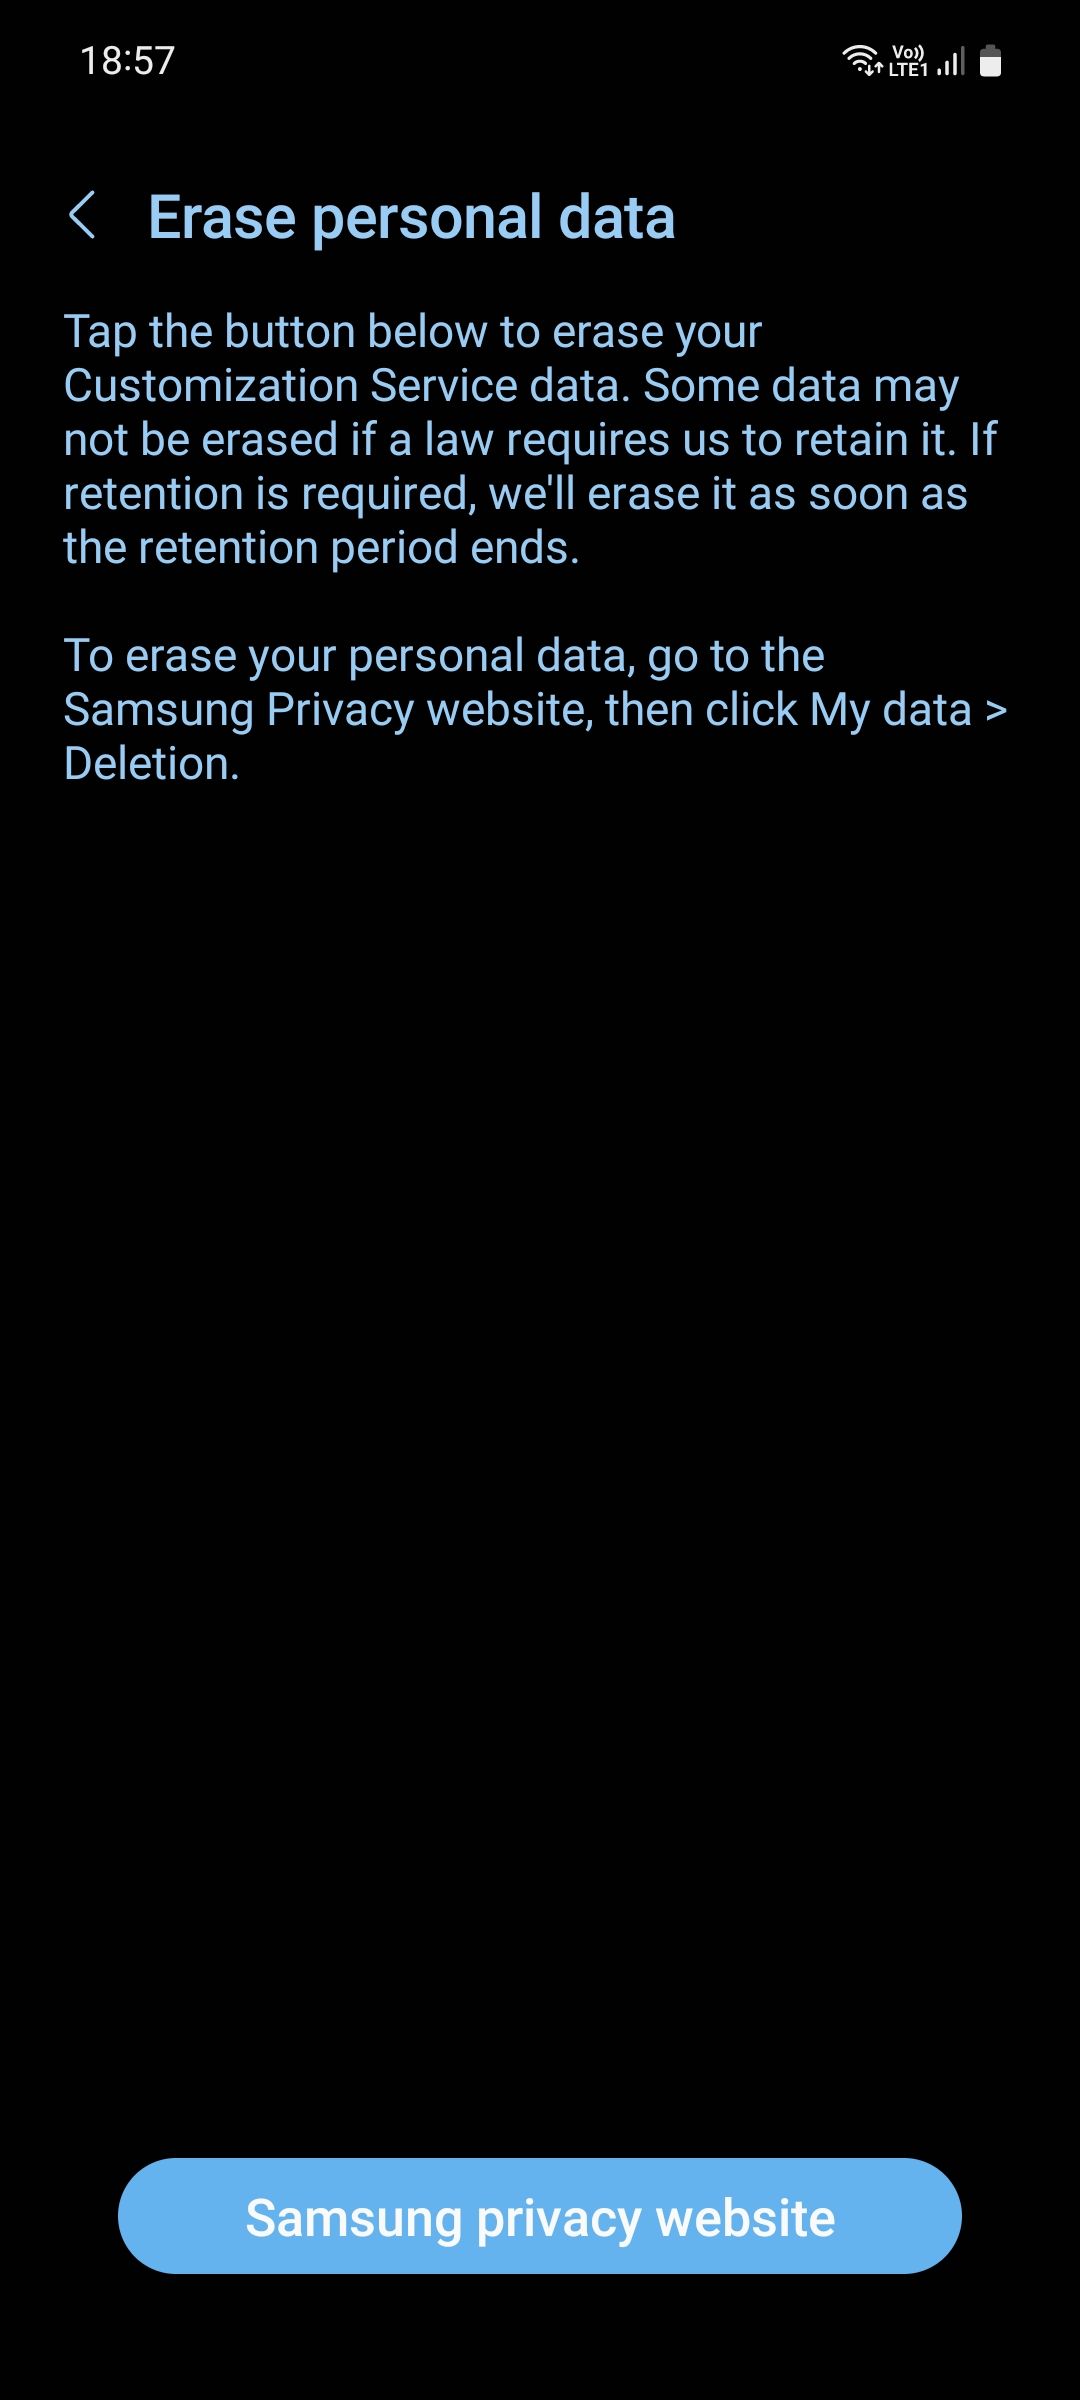 Samsung Erase personal data menu